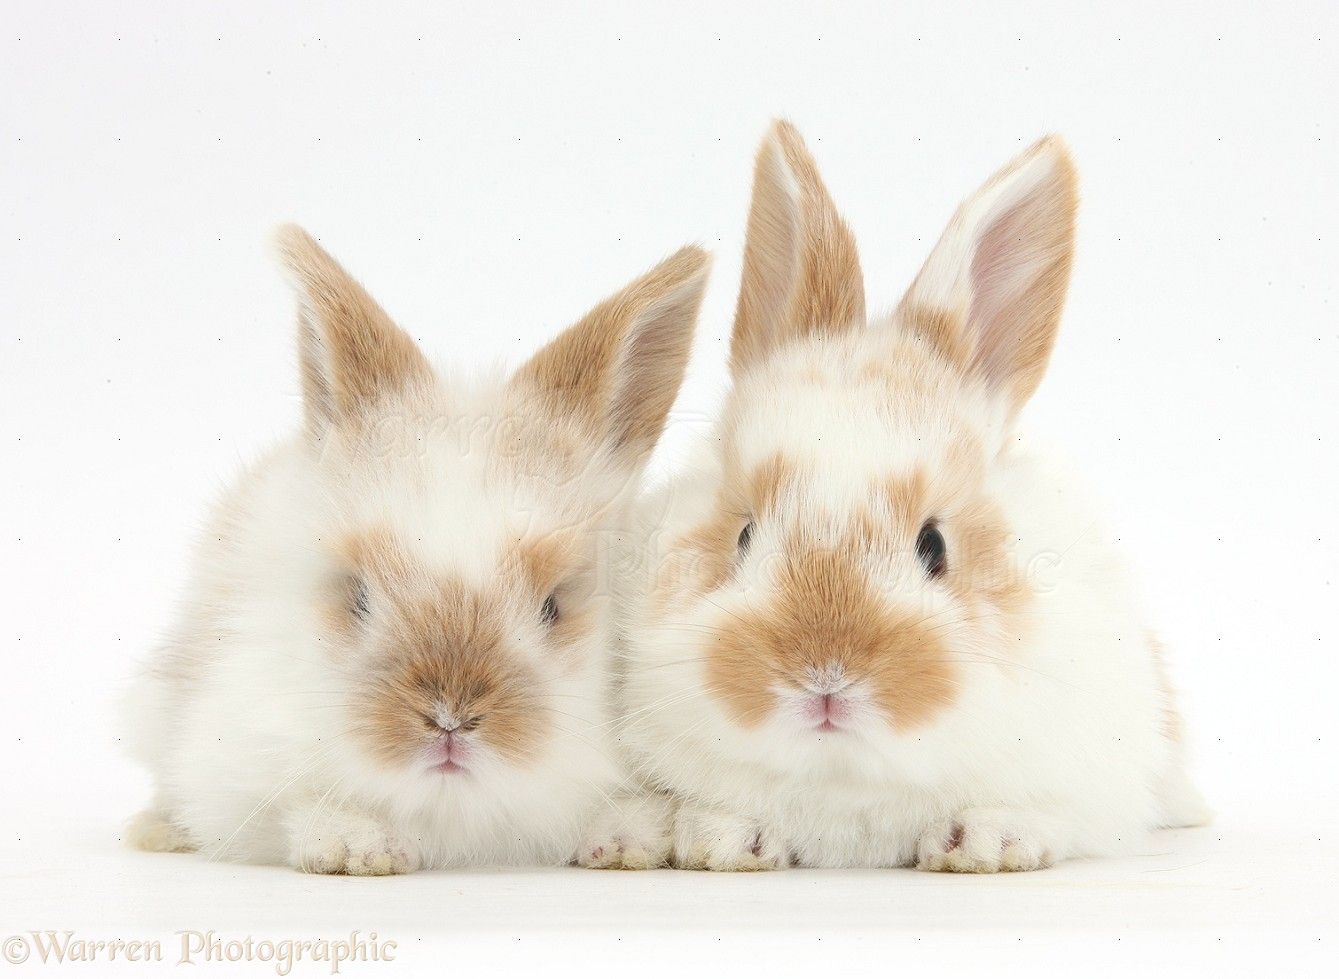 Wallpaper in 2Pics: cute rabbits in photo